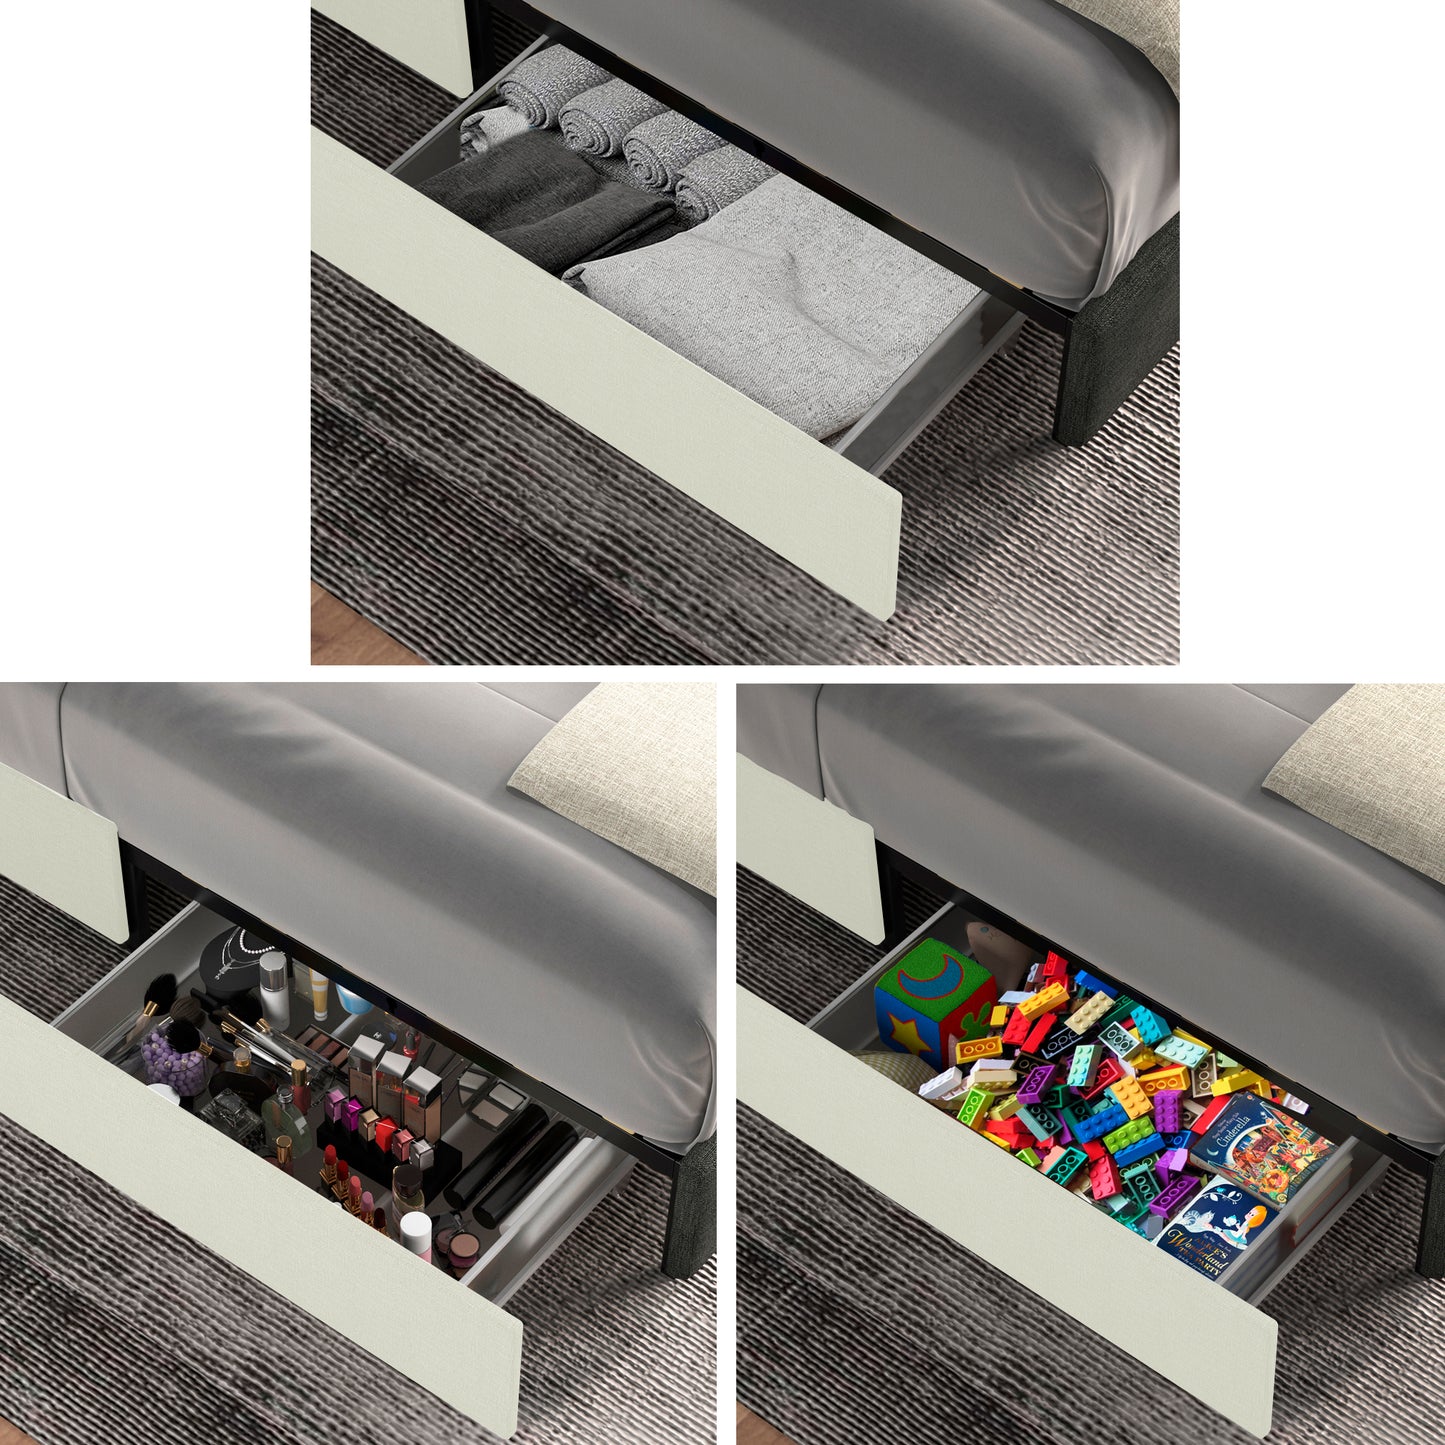 Vera Queen Ivory Velvet Upholstered Platform Bed  w/ Storage